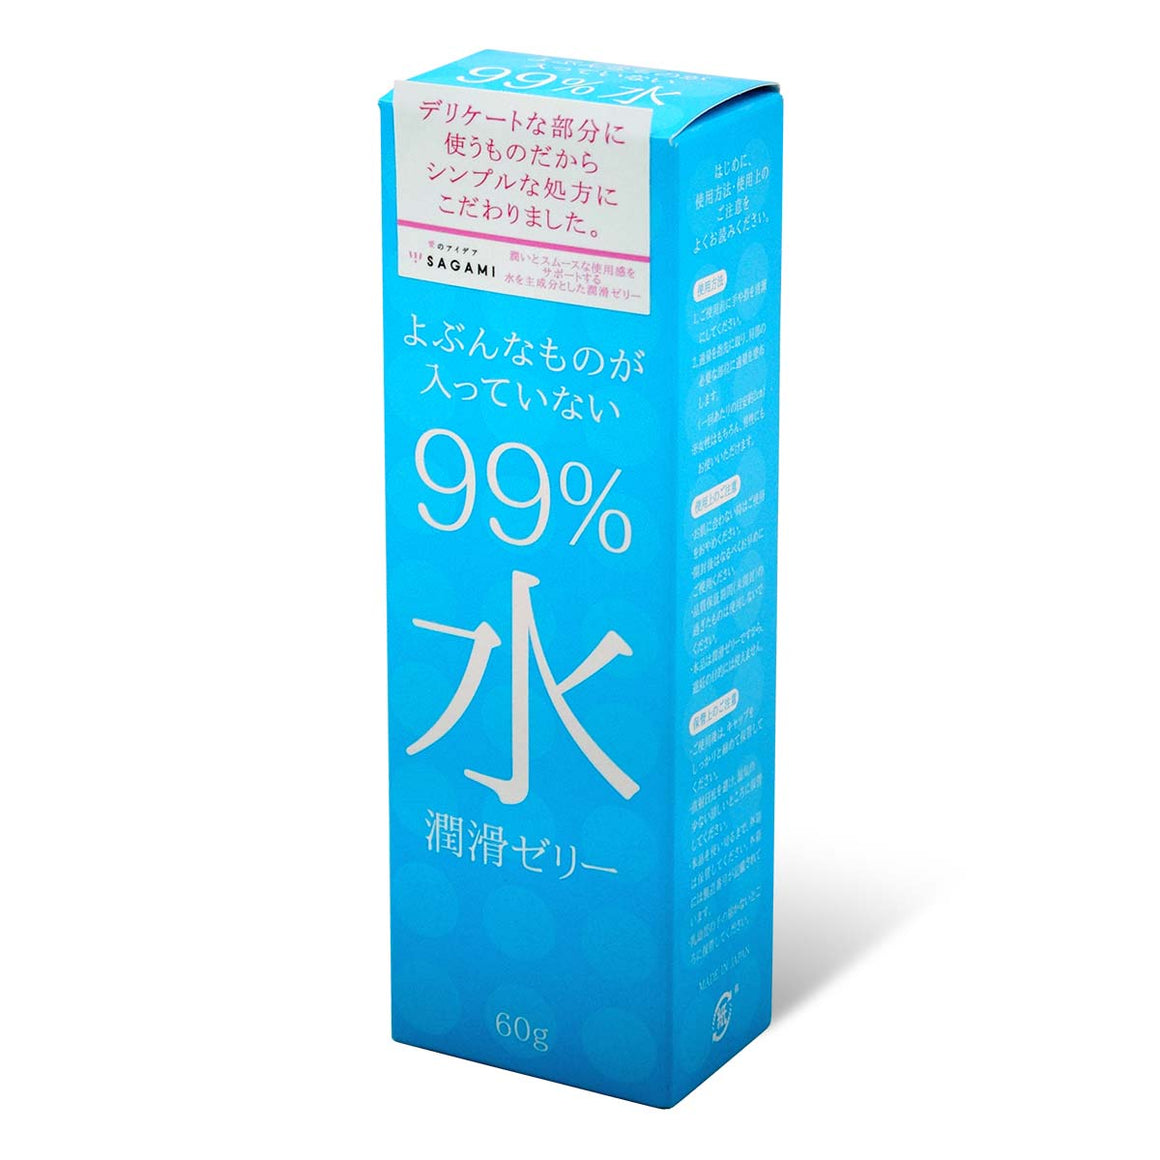 Sagami 相模原創 99% 水潤滑 60g 水性潤滑劑 - Lovenjoy Club